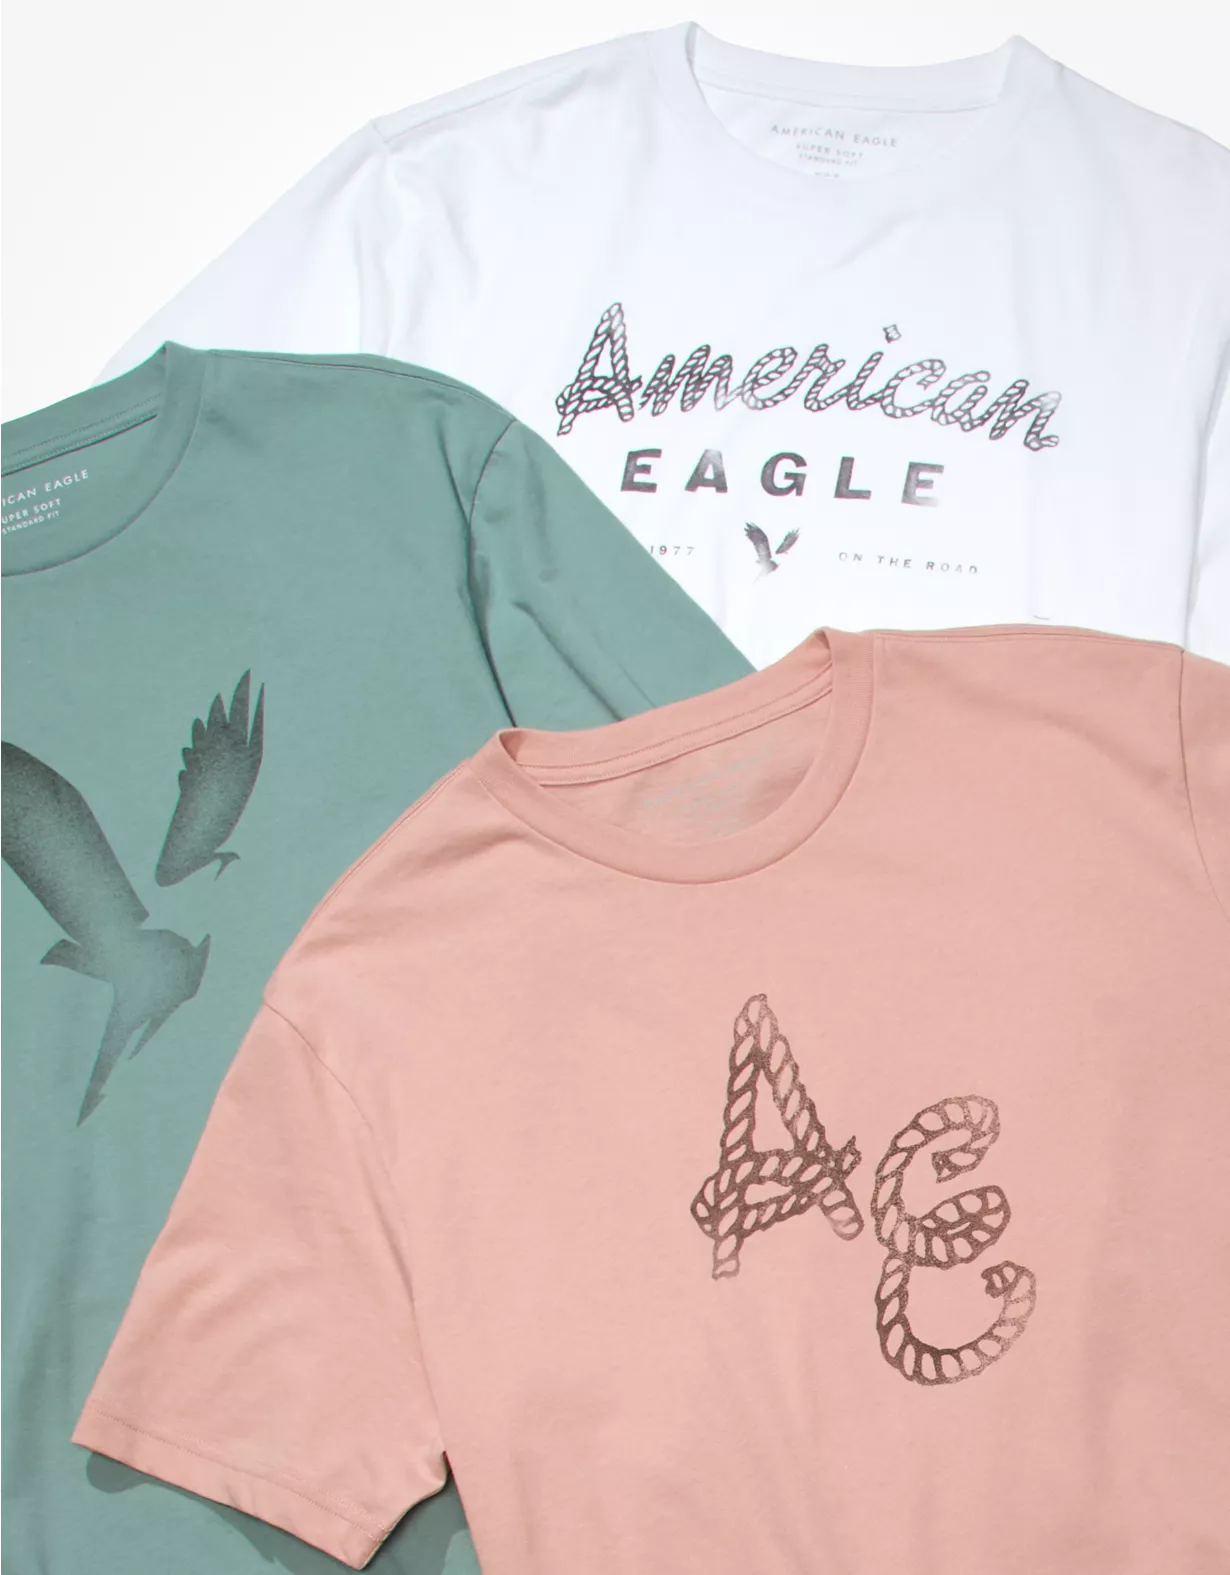 AE Super Soft Graphic T-Shirt 3-Pack